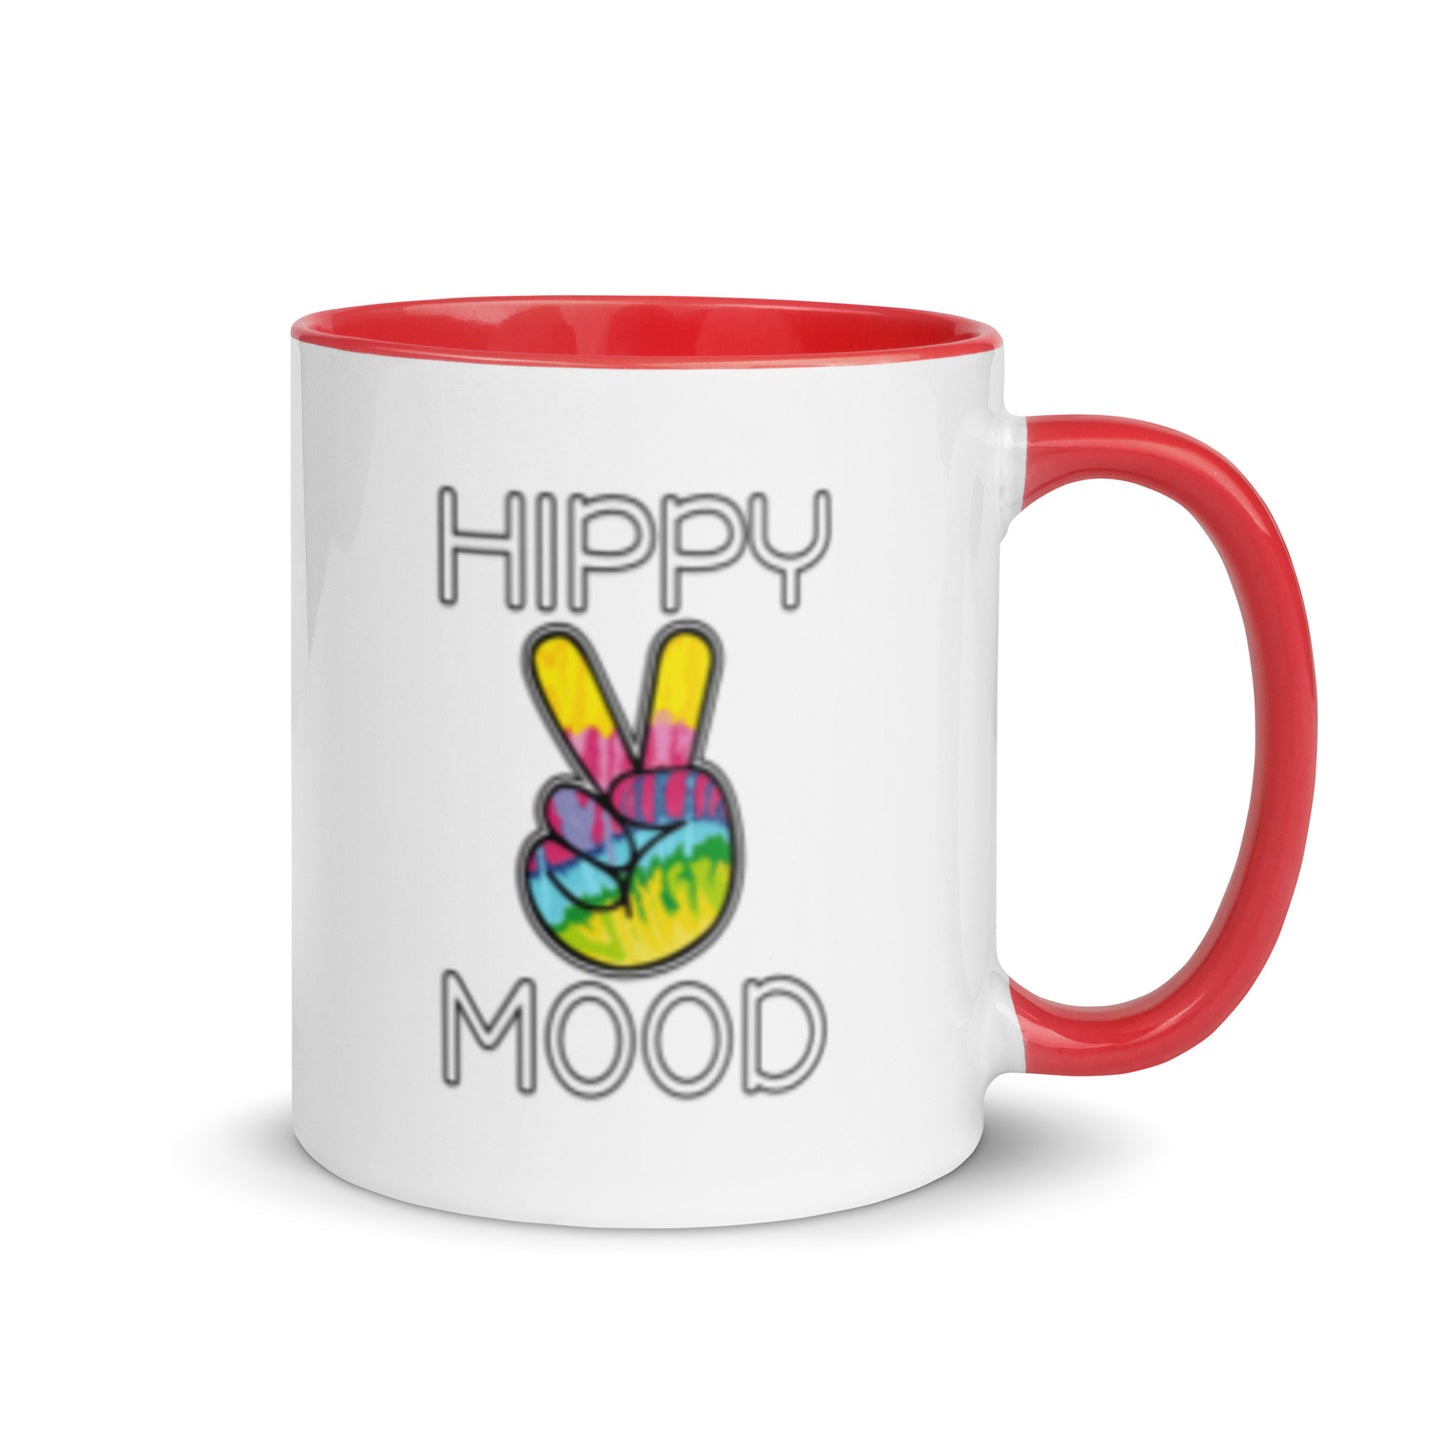 Hippy Mood Mug with Color Inside